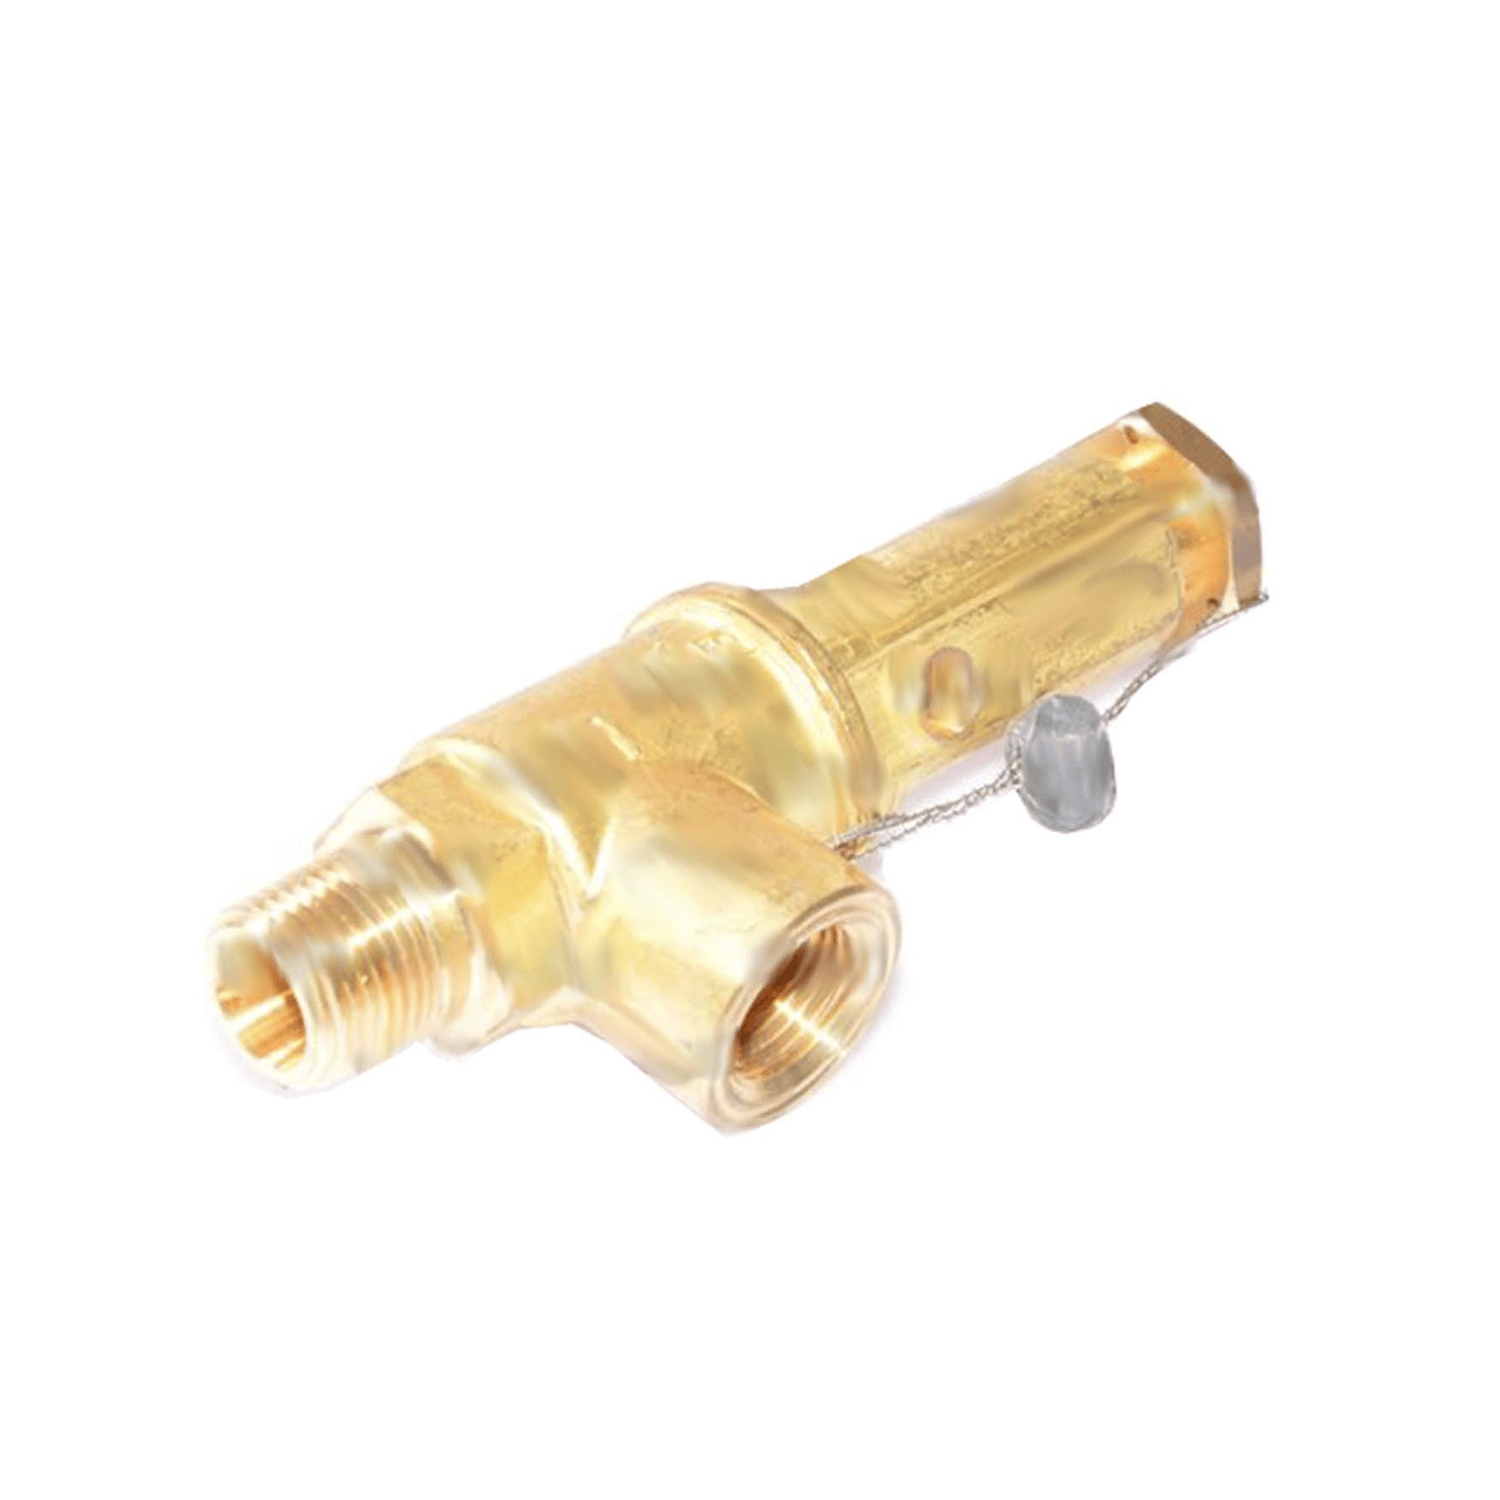 Safety valve CASTEL 3030 / 44C100, flare connection 1/2 "NPT, 10 bar